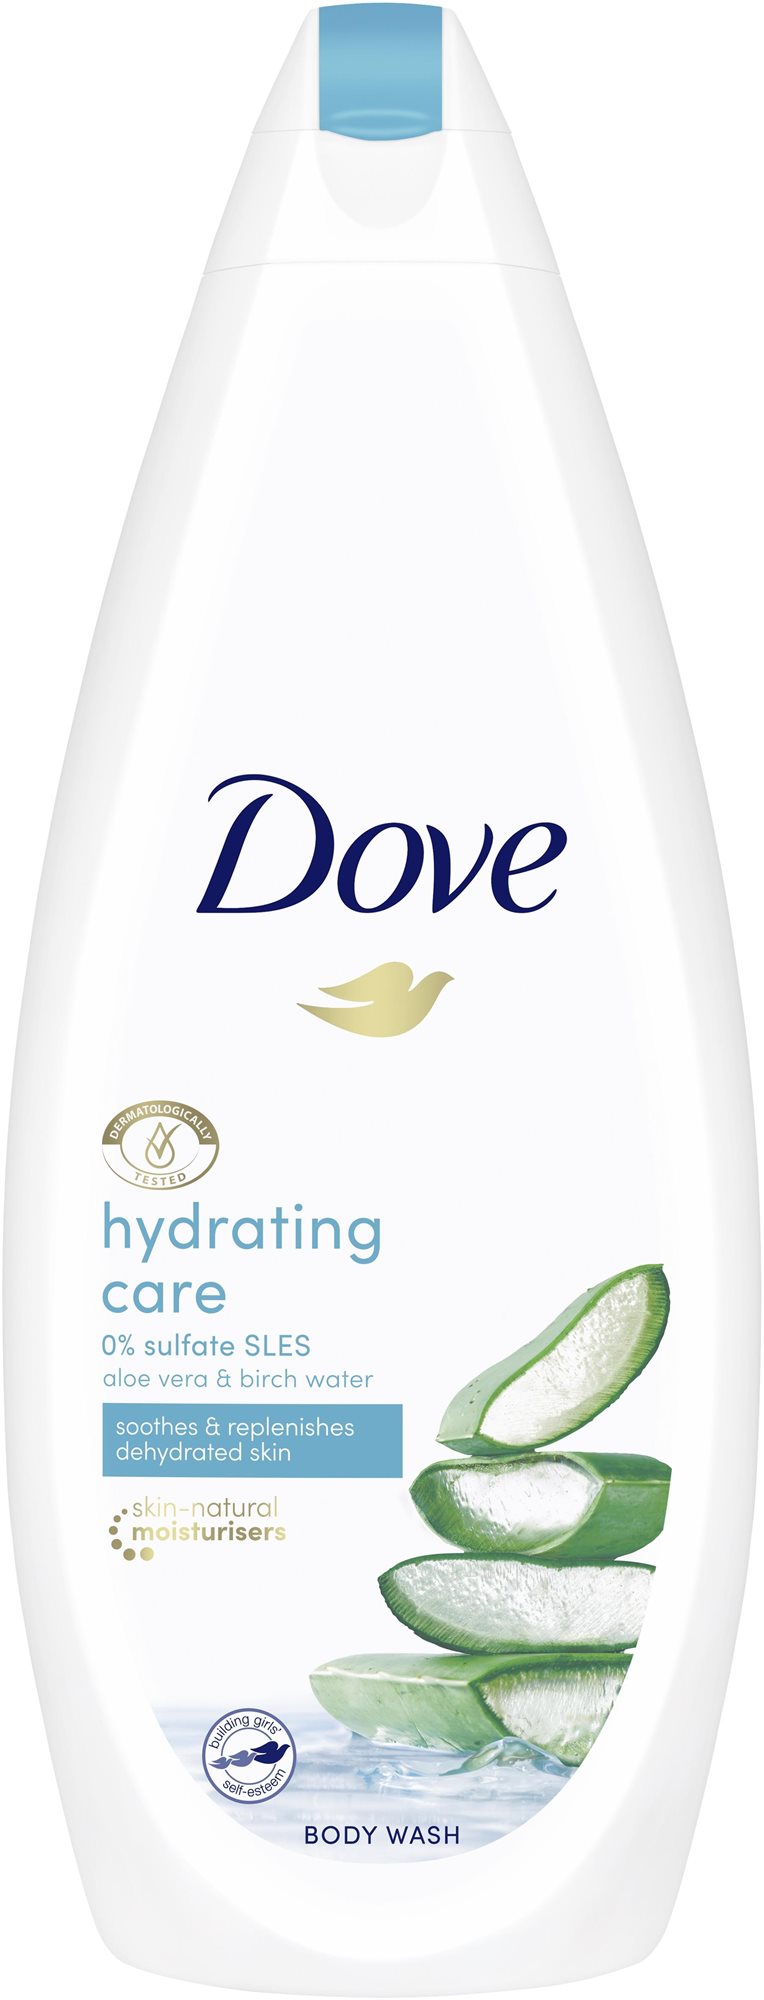 DOVE Hydrating Care Body Wash 750 ml